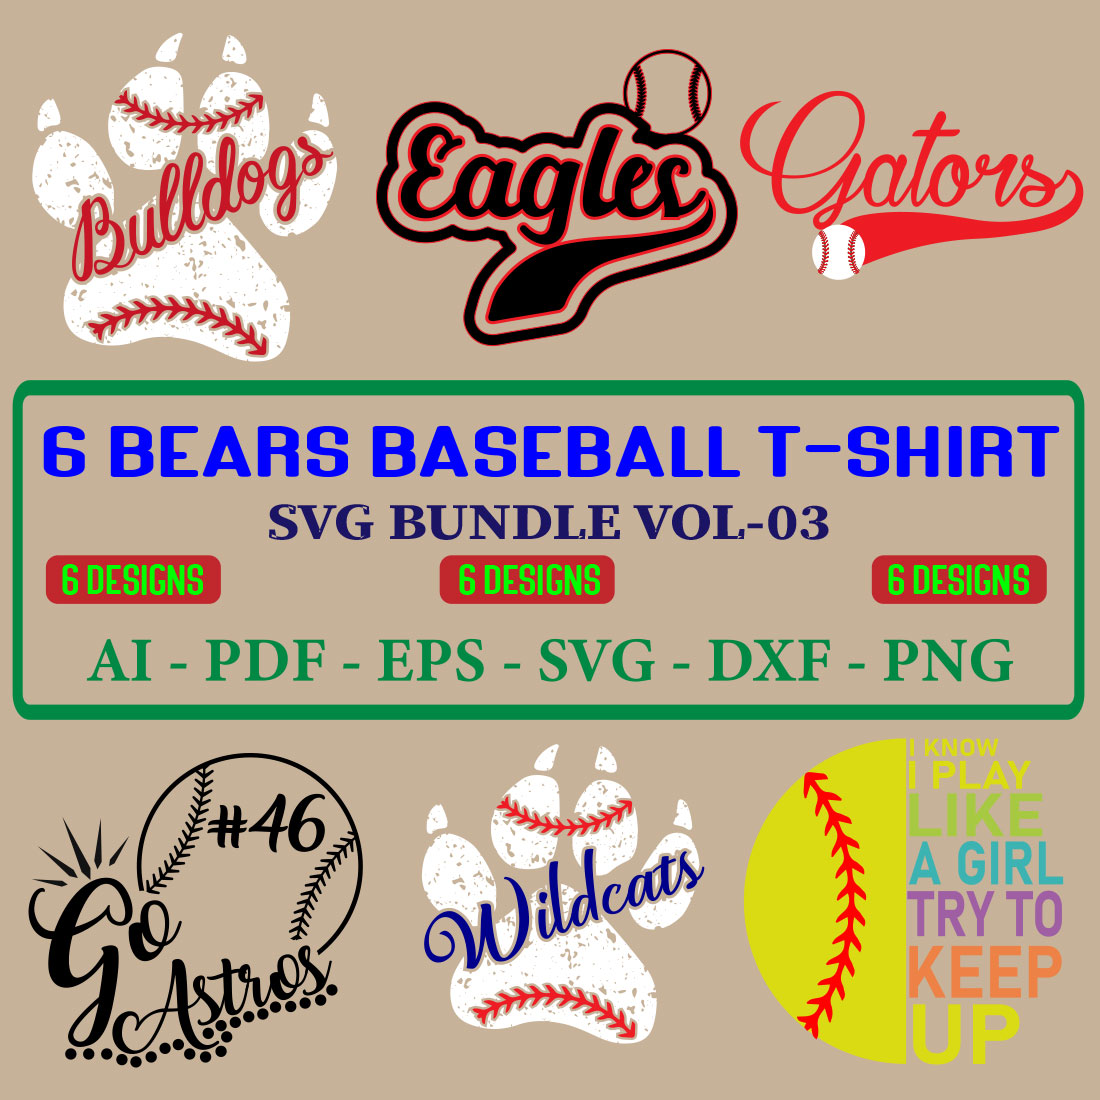 6 Bears Baseball T-shirt SVG Bundle Vol-03 cover image.